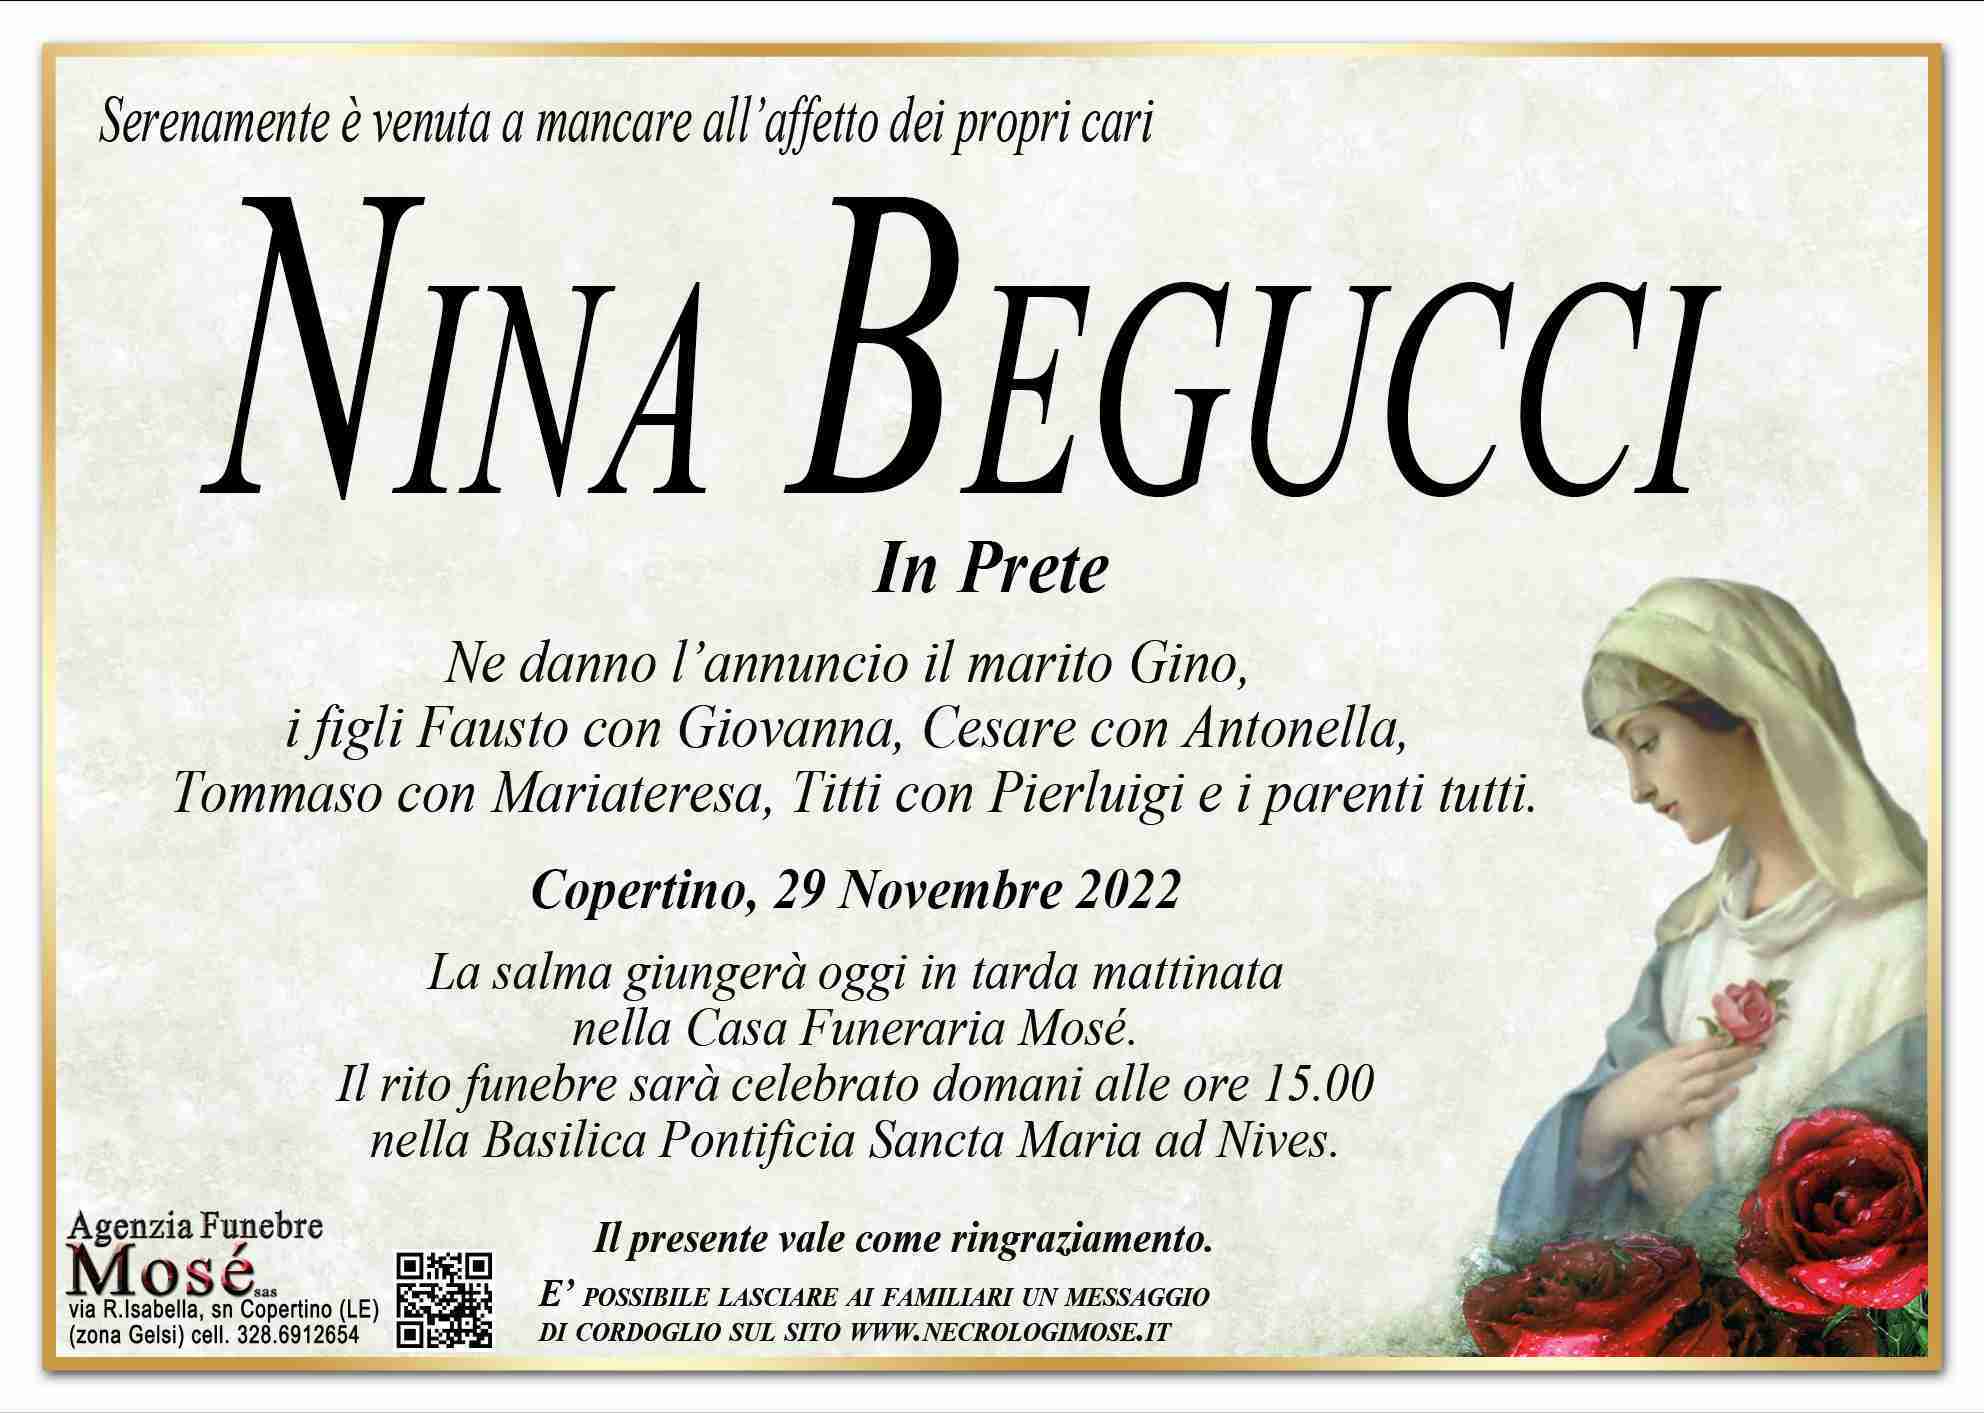 Nina Begucci